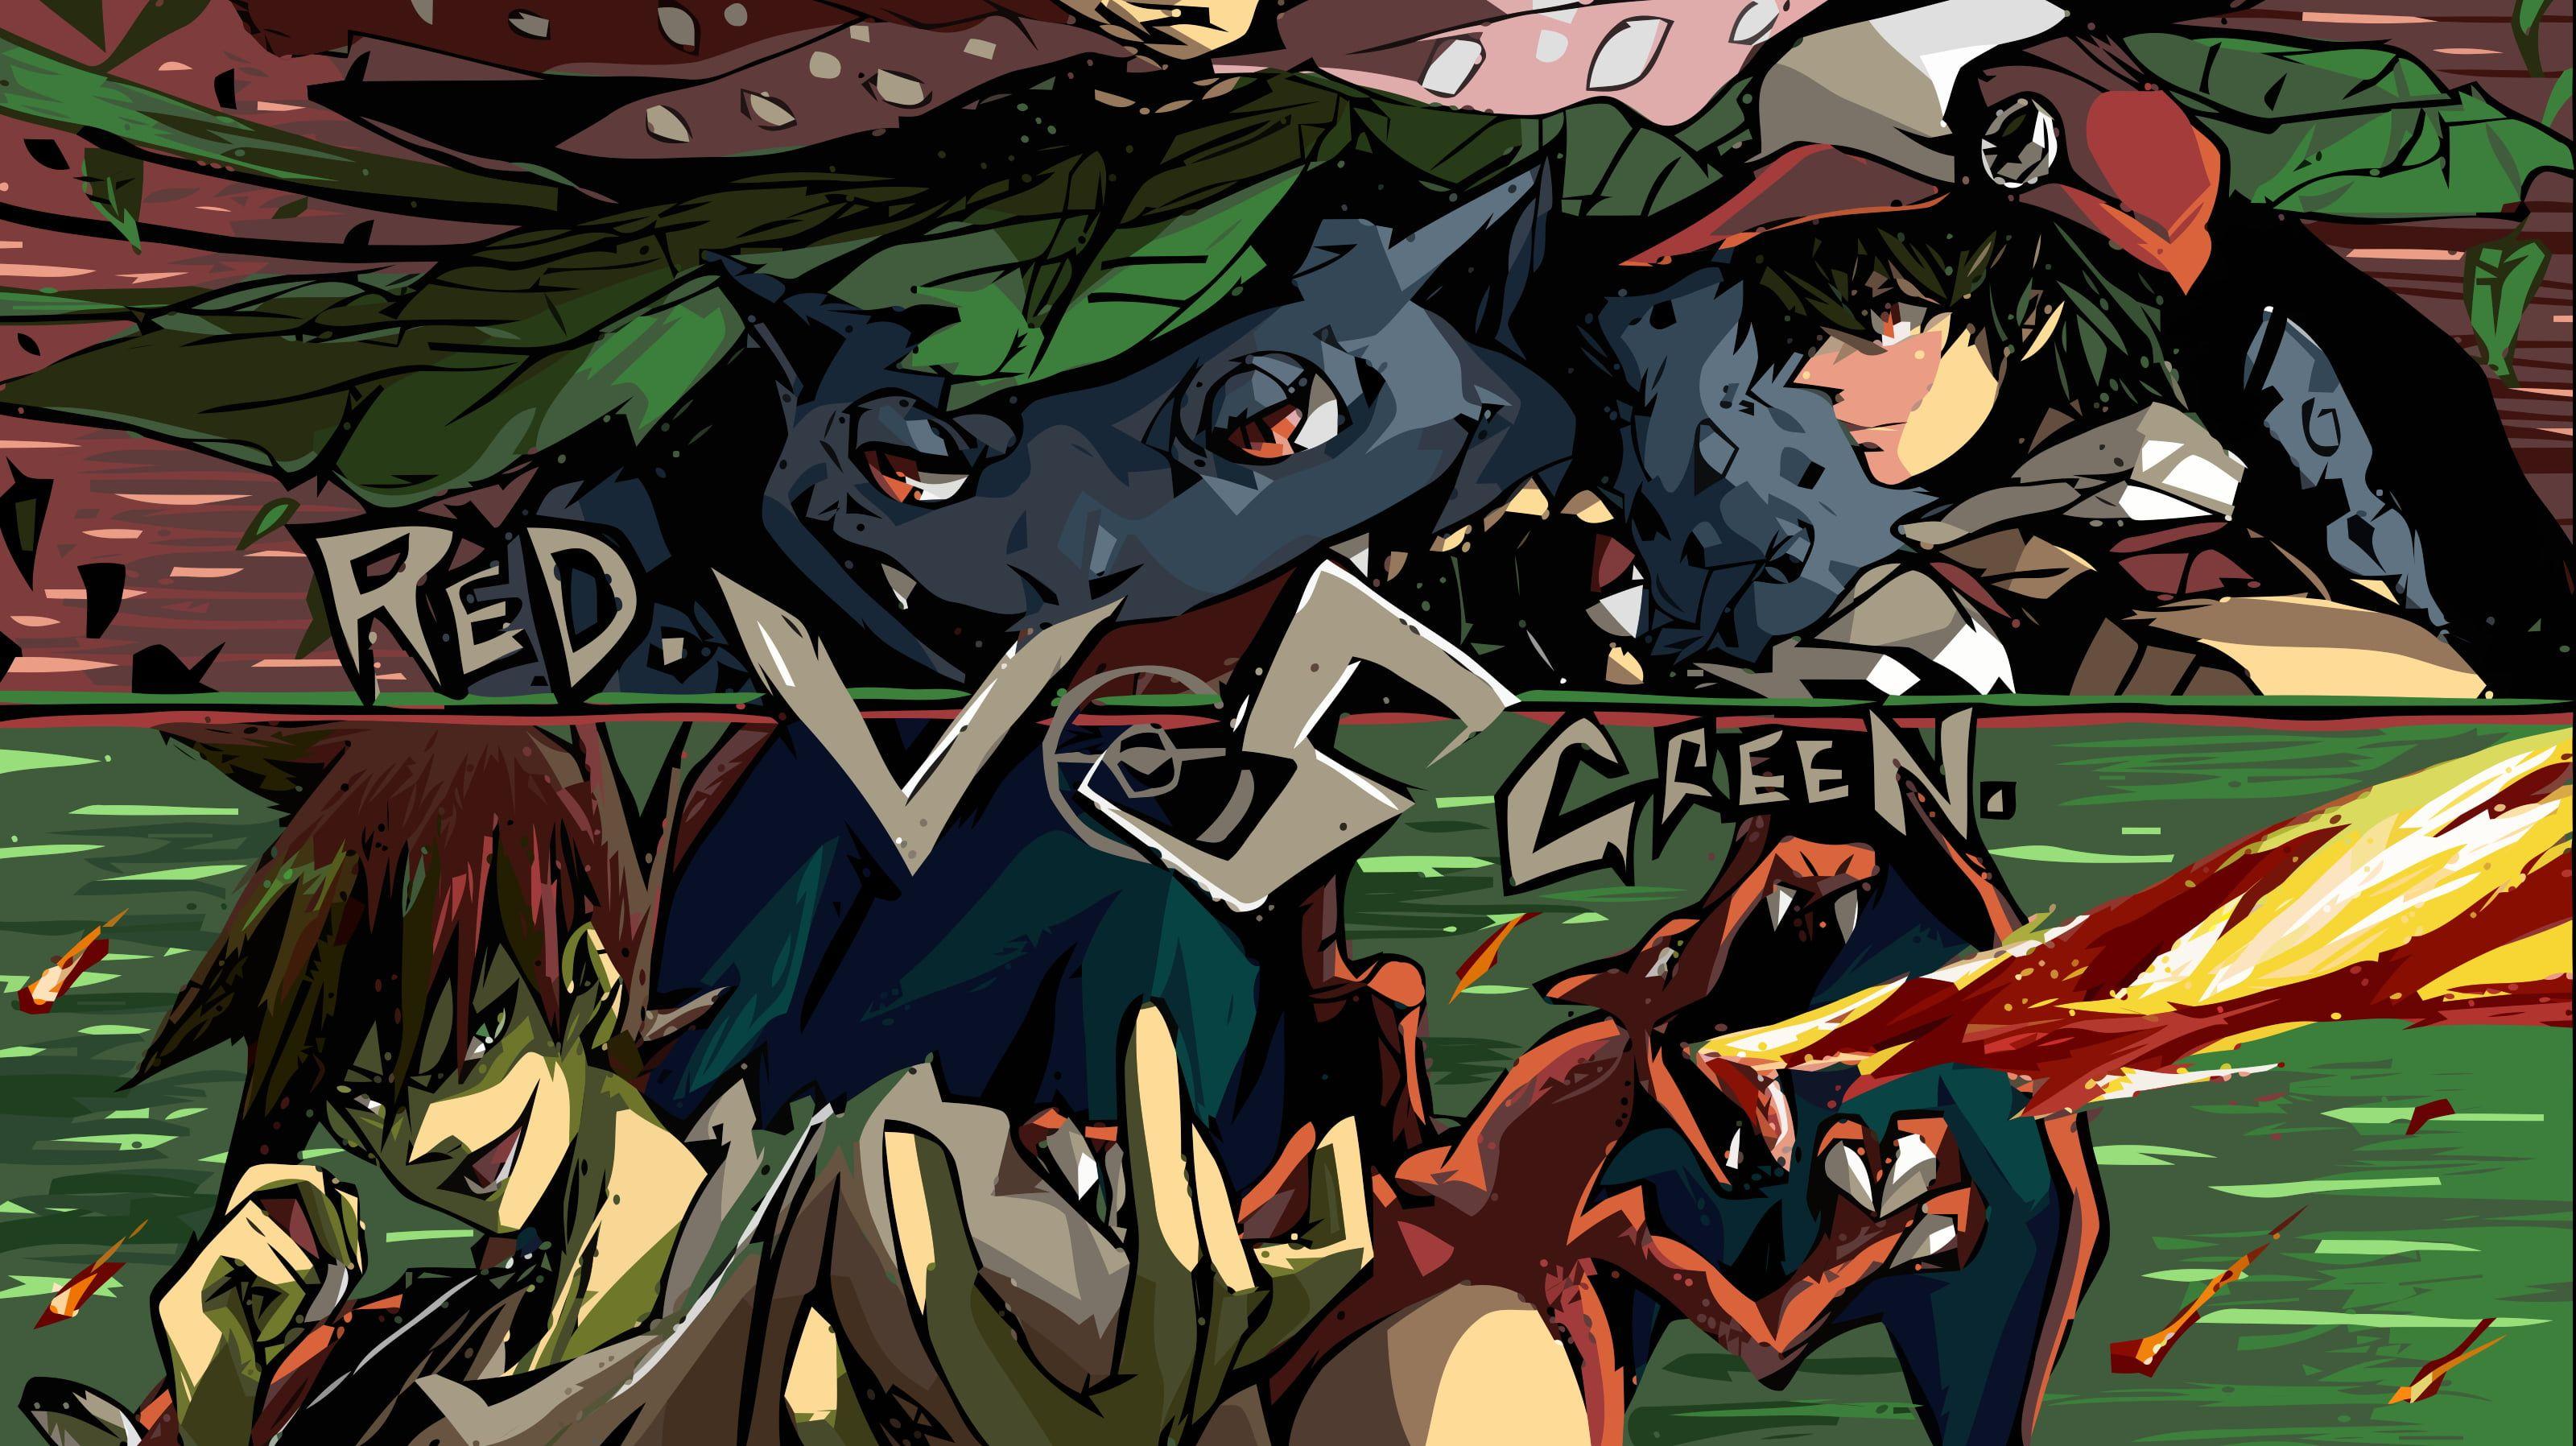 Pokemon Red vs Green collage artwork HD wallpaper